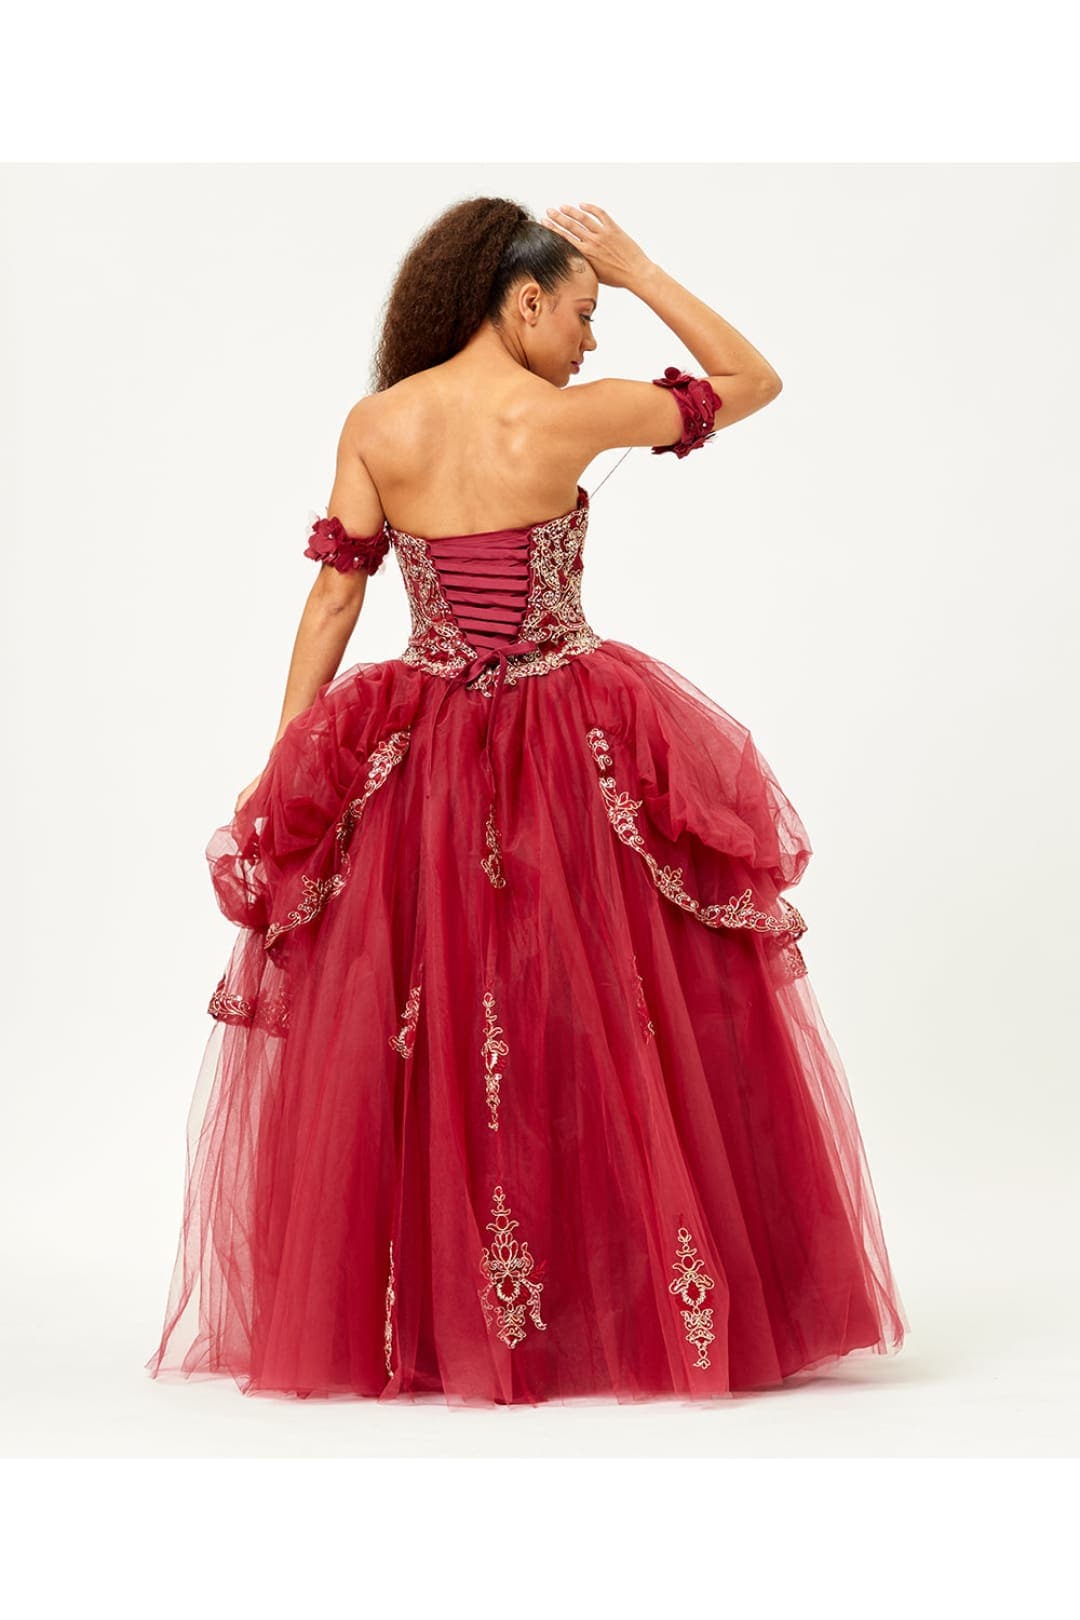 Layla K LK120 Strapless Detachable Off Shoulder Sweetheart Ball Gown - Dress